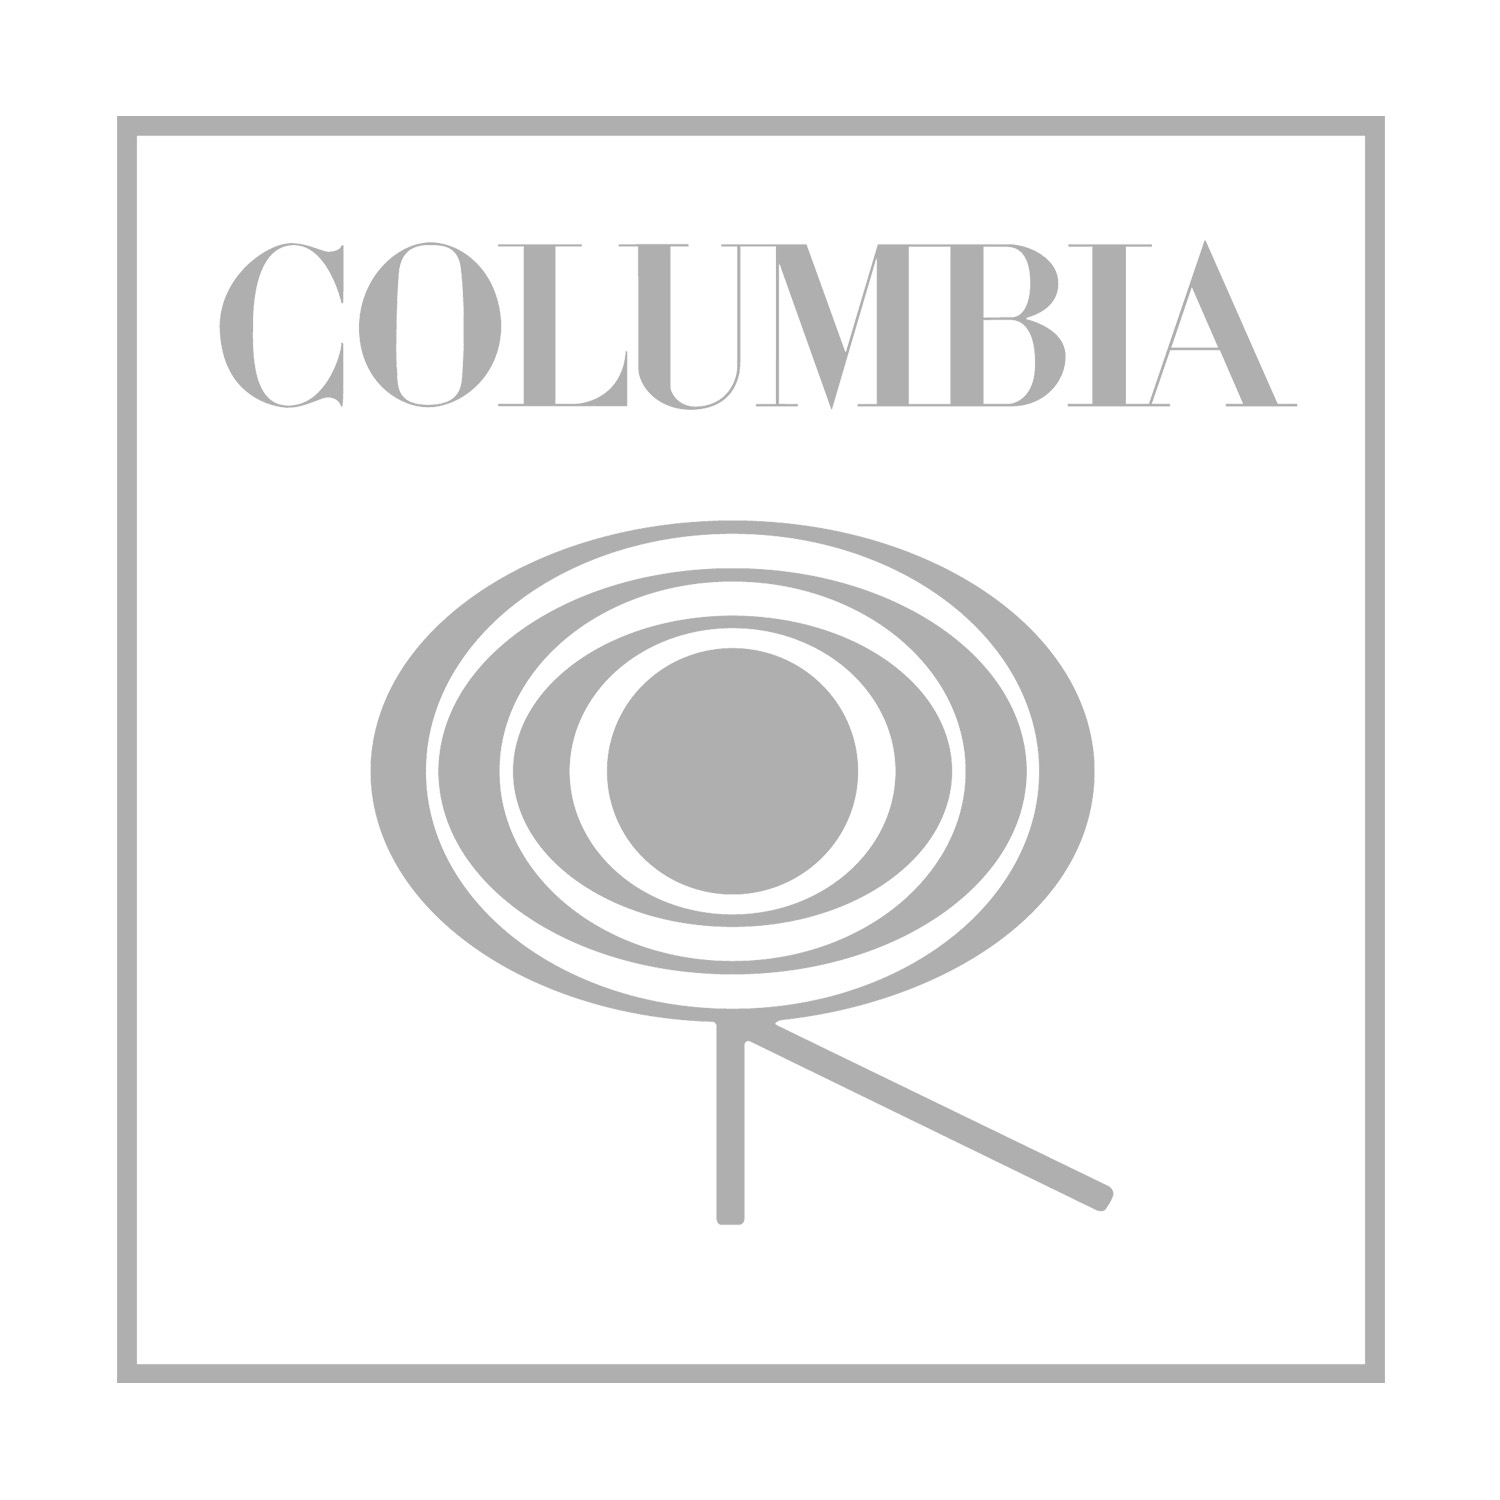 columbia.jpg